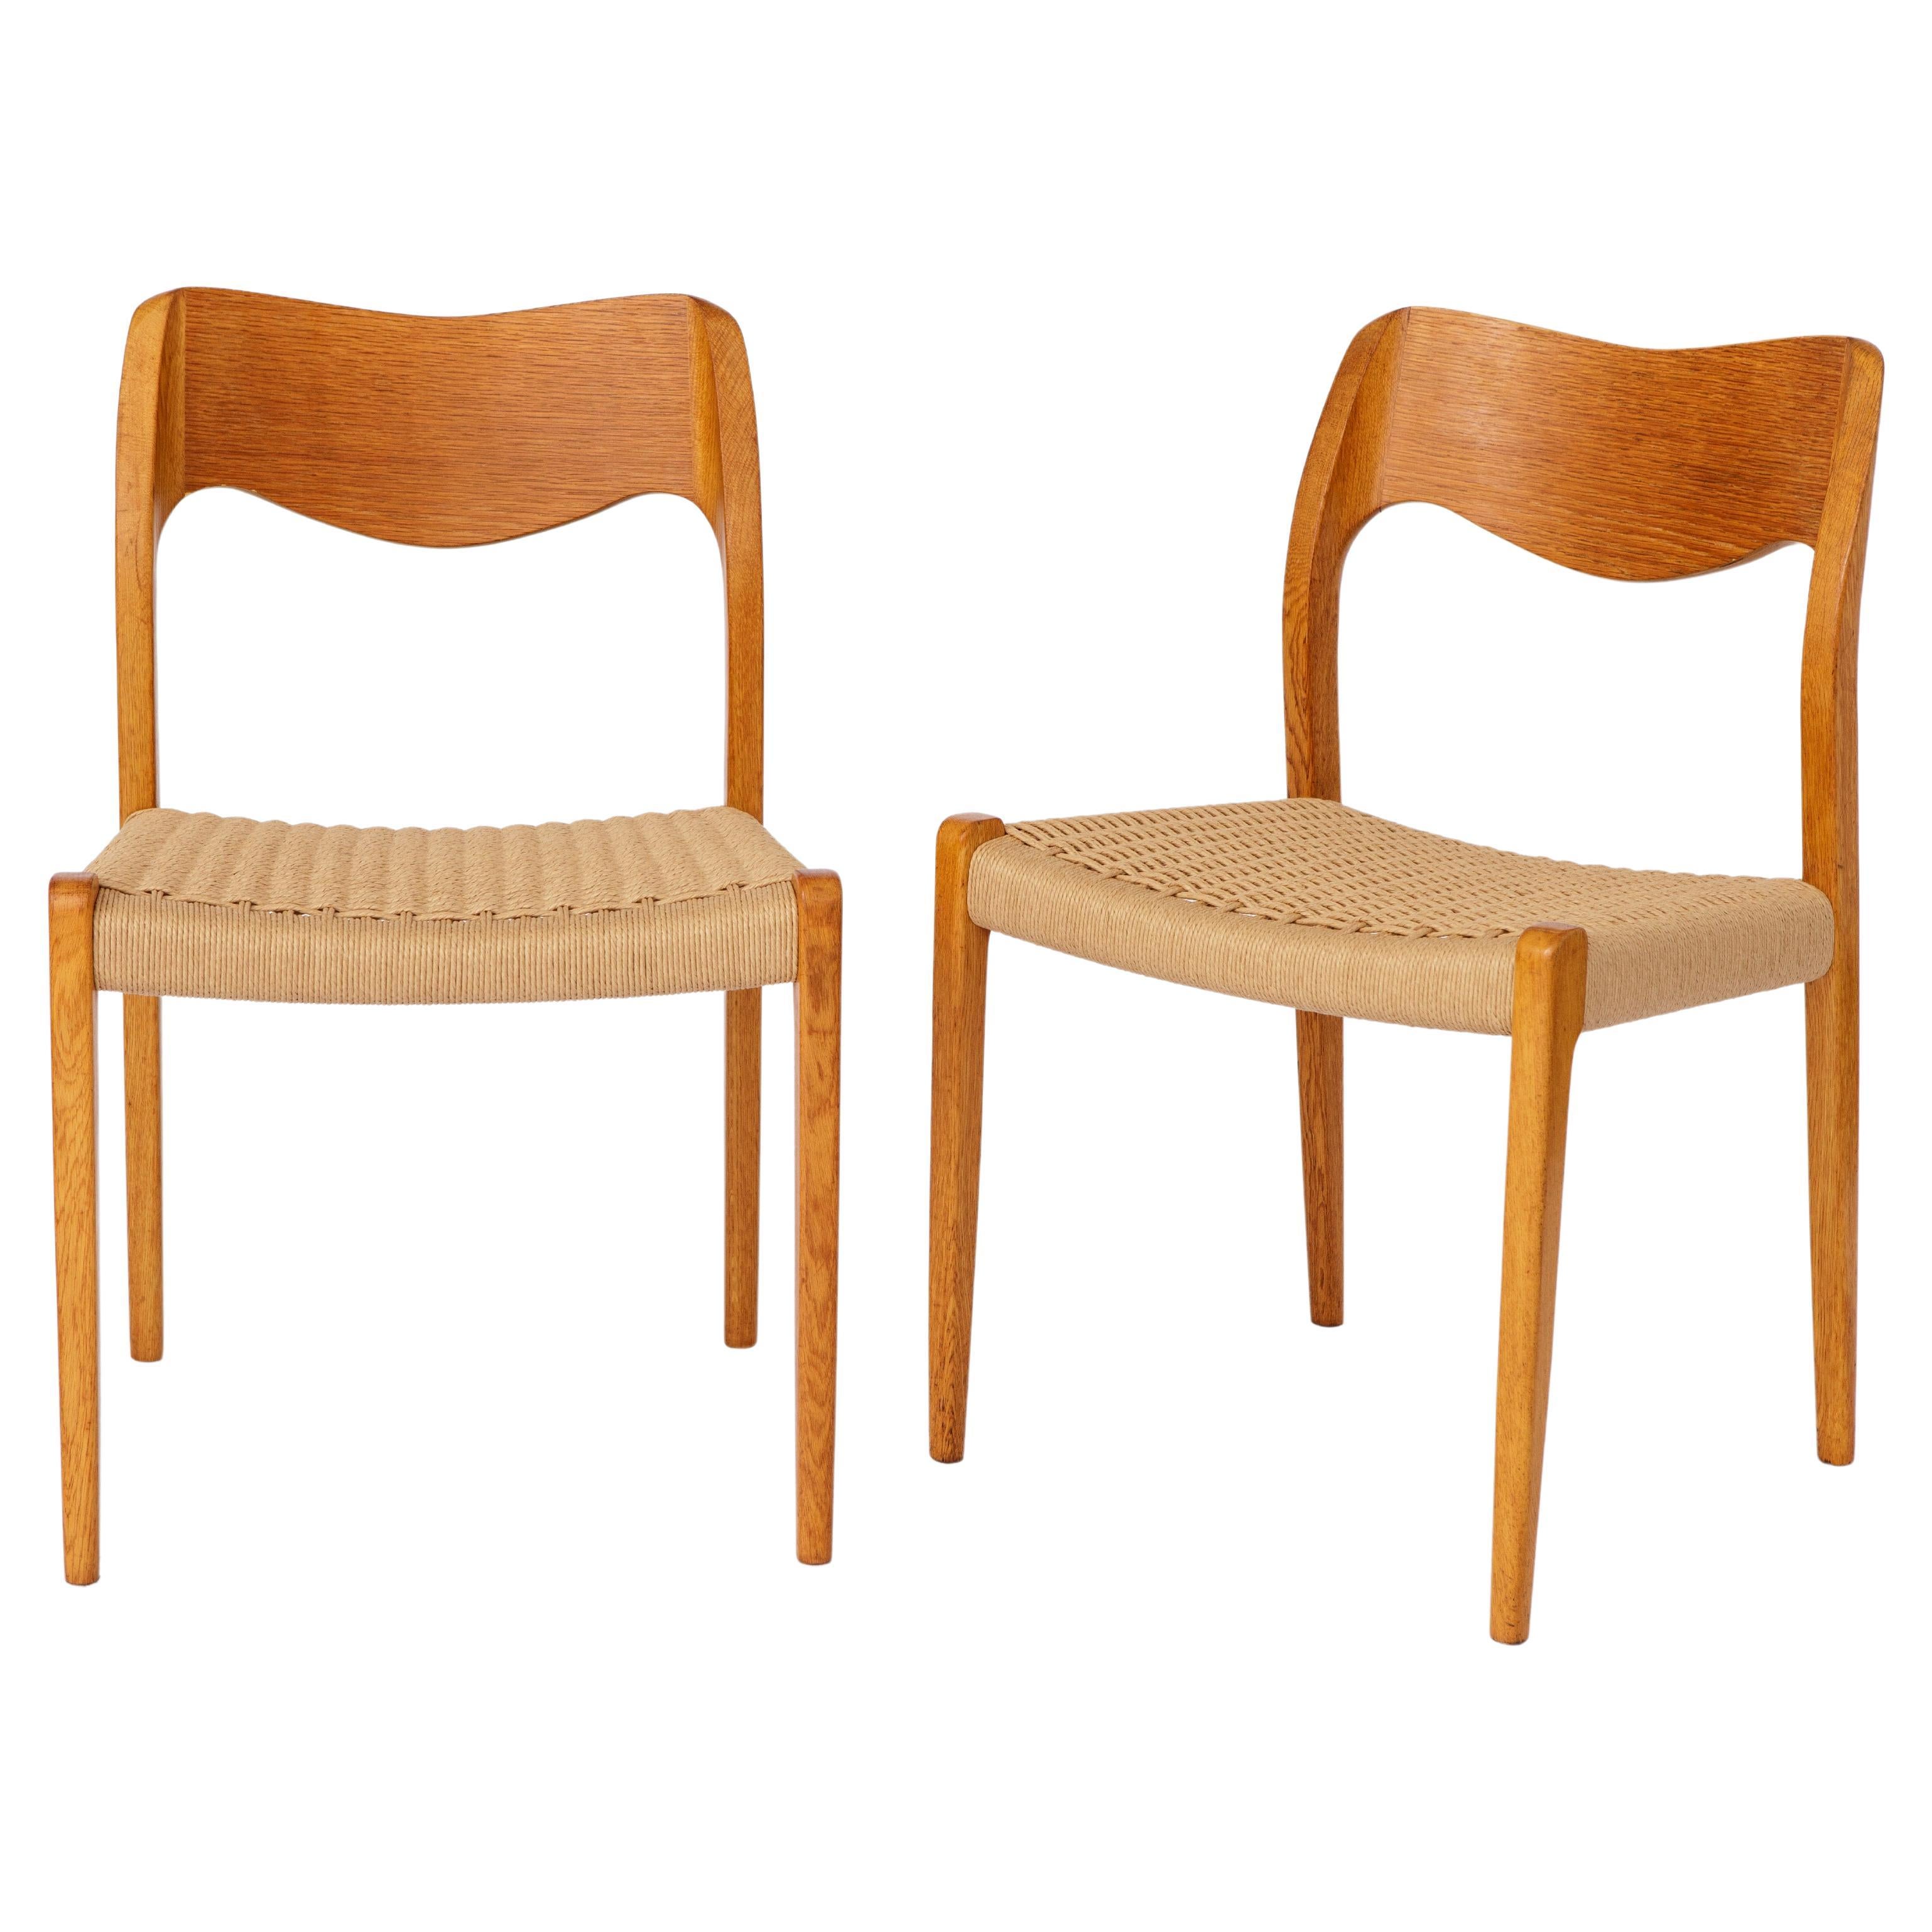 Pair Niels Moller Chairs, model 71 Oak, 1950s Vintage Danish For Sale